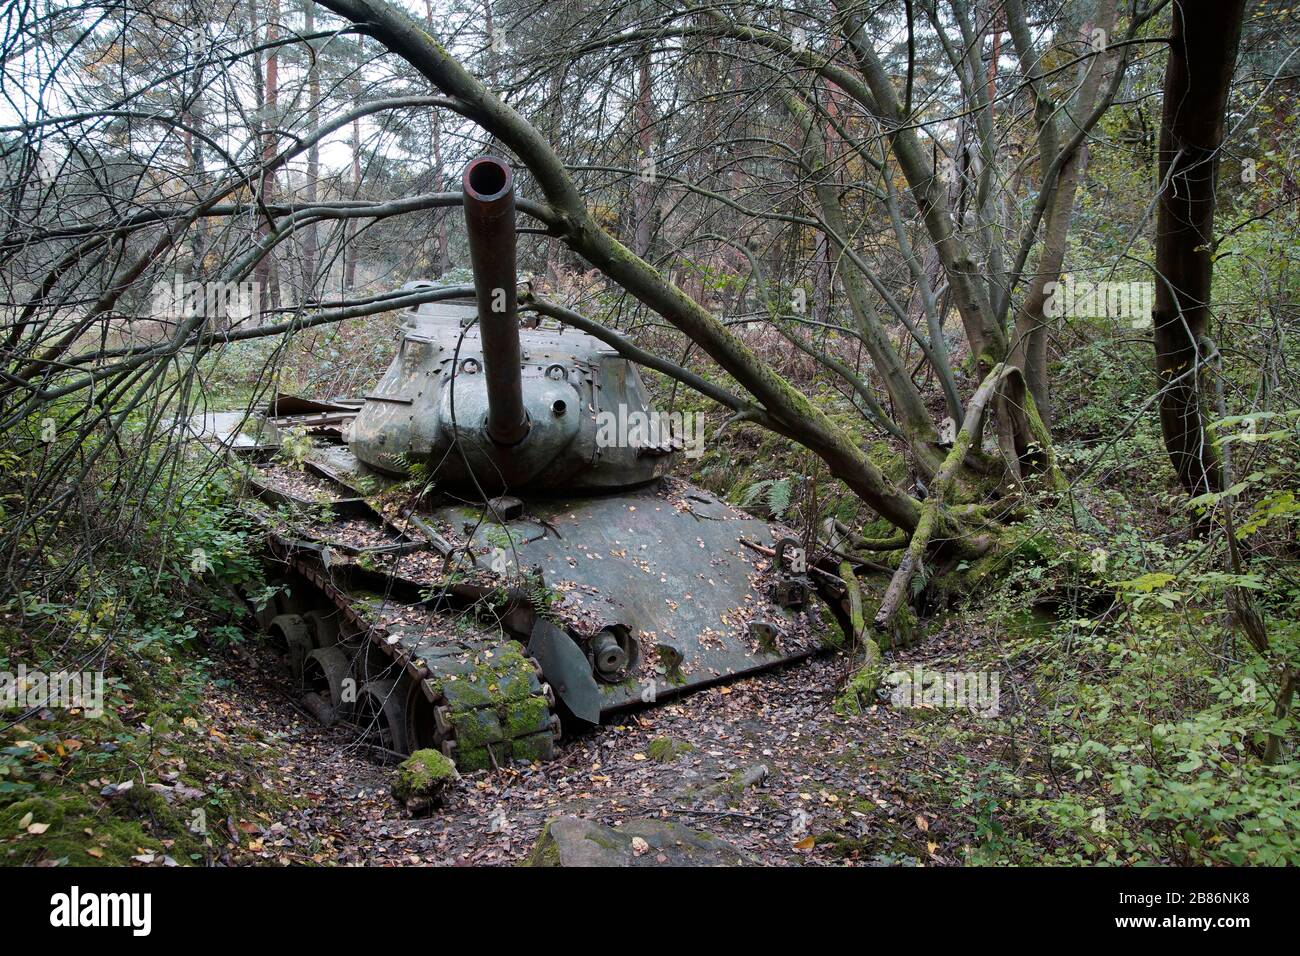 Panzerwrack M47 Patton im Brander Wald / Aachen / Germany Stock Photo